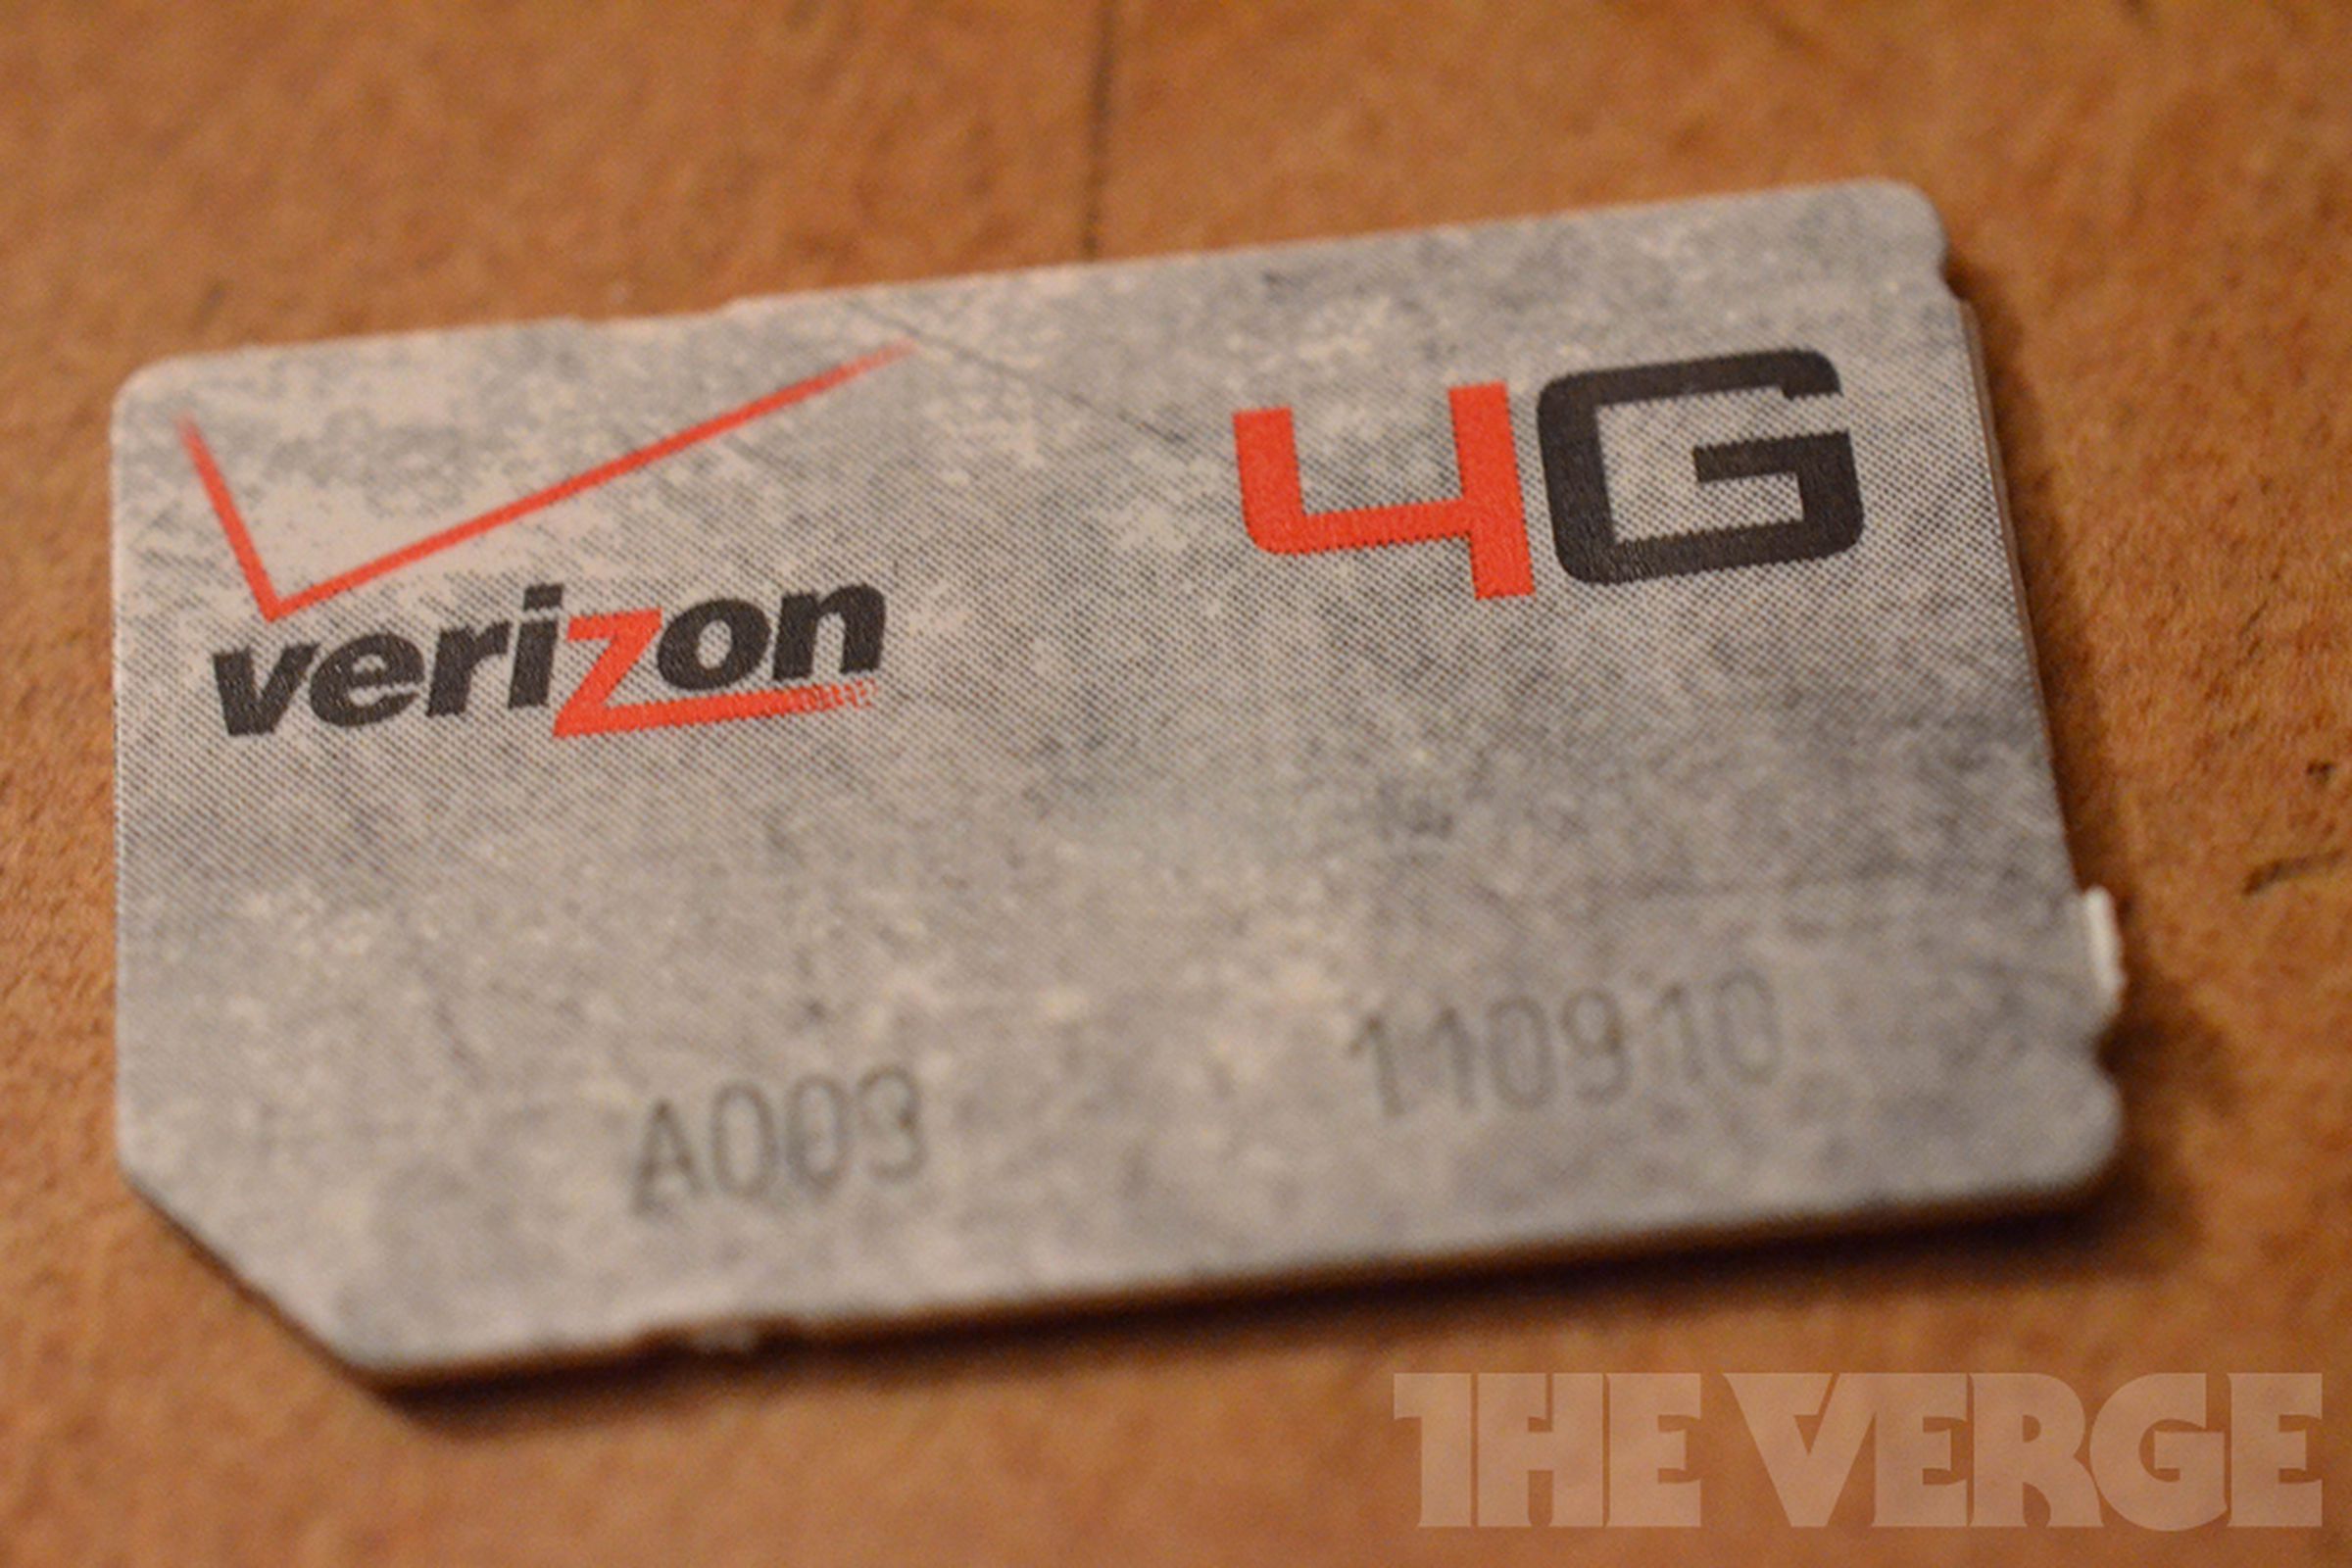 Verizon 4G LTE SIM Card (1020)